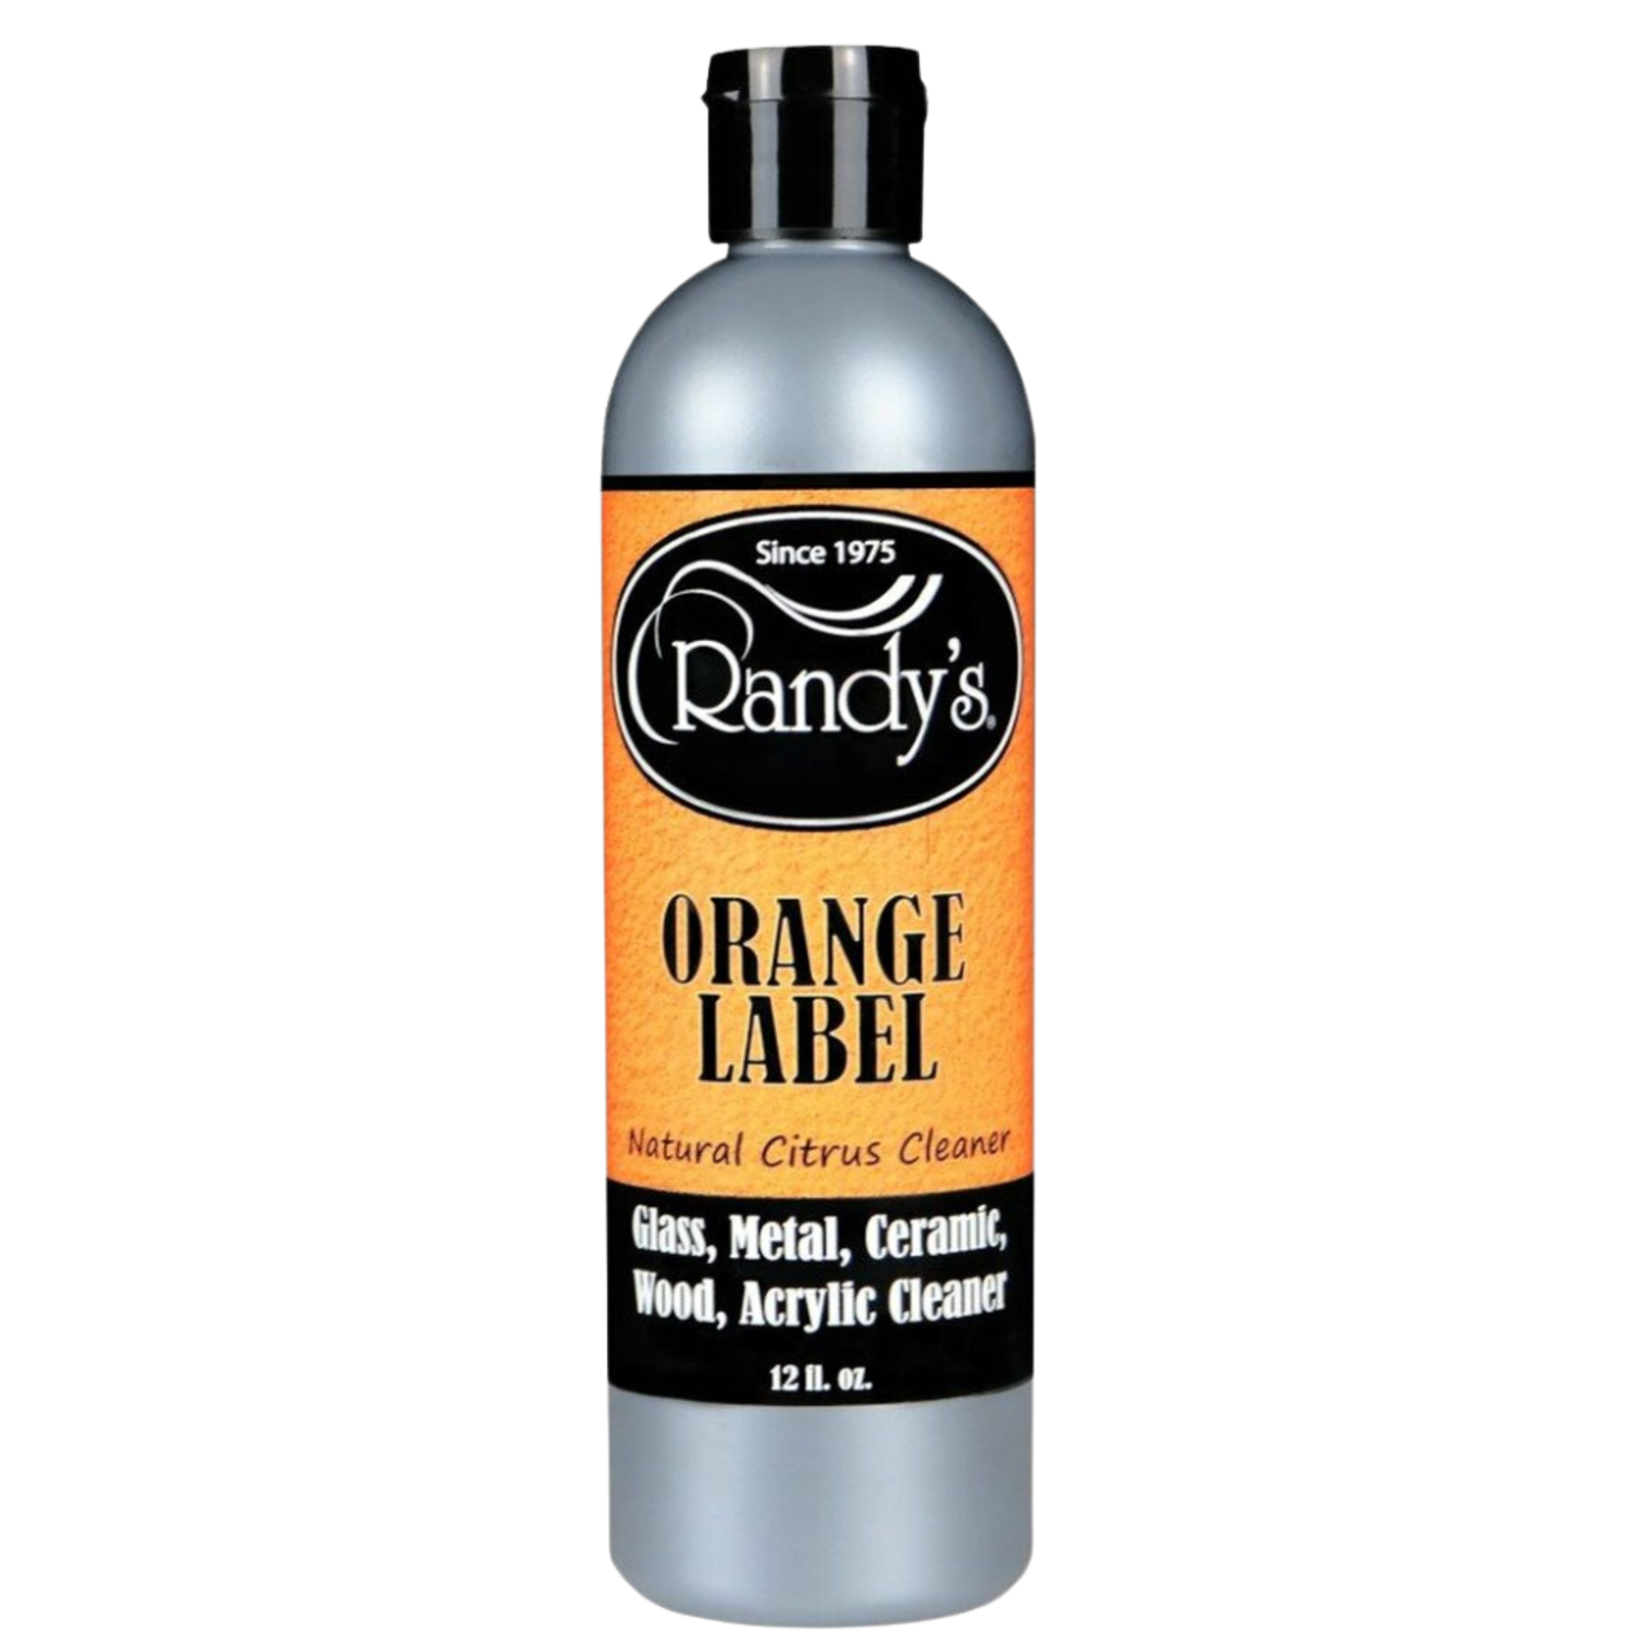 Randy's Randy's Orange Label Natural Citrus Cleaner - 12oz Bottle